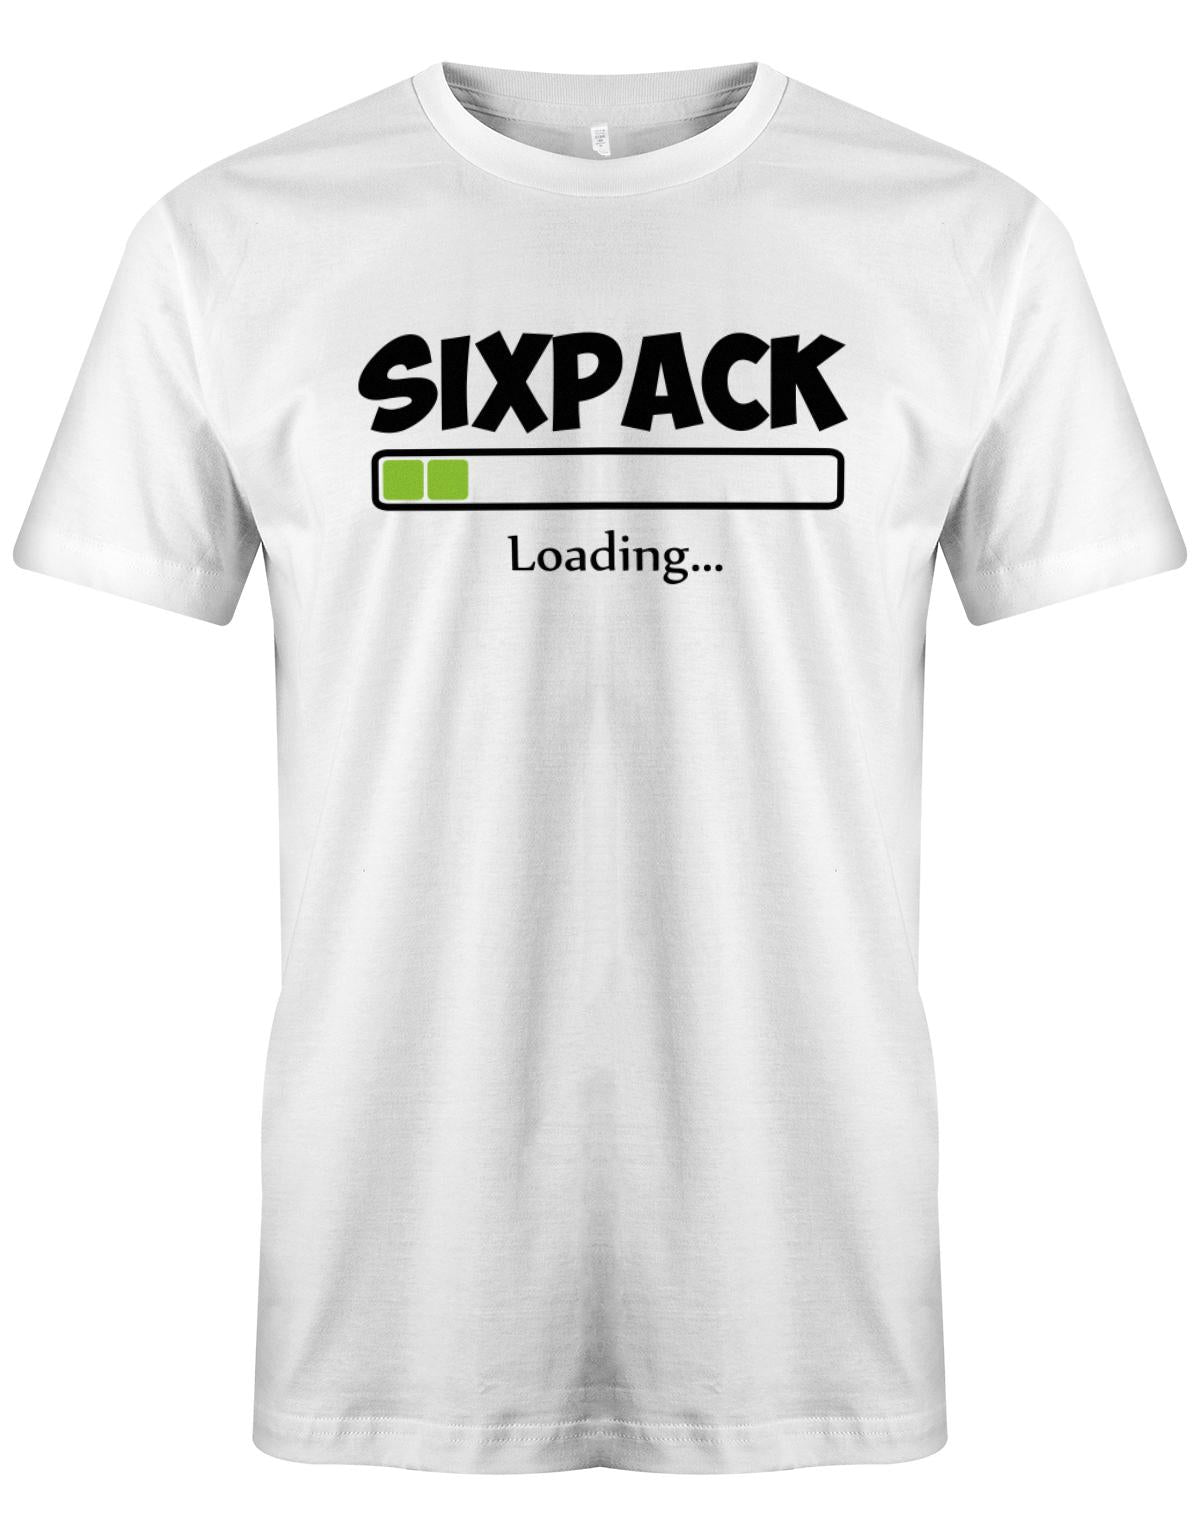 Sixpack-loading-Herren-Shirt-Weiss